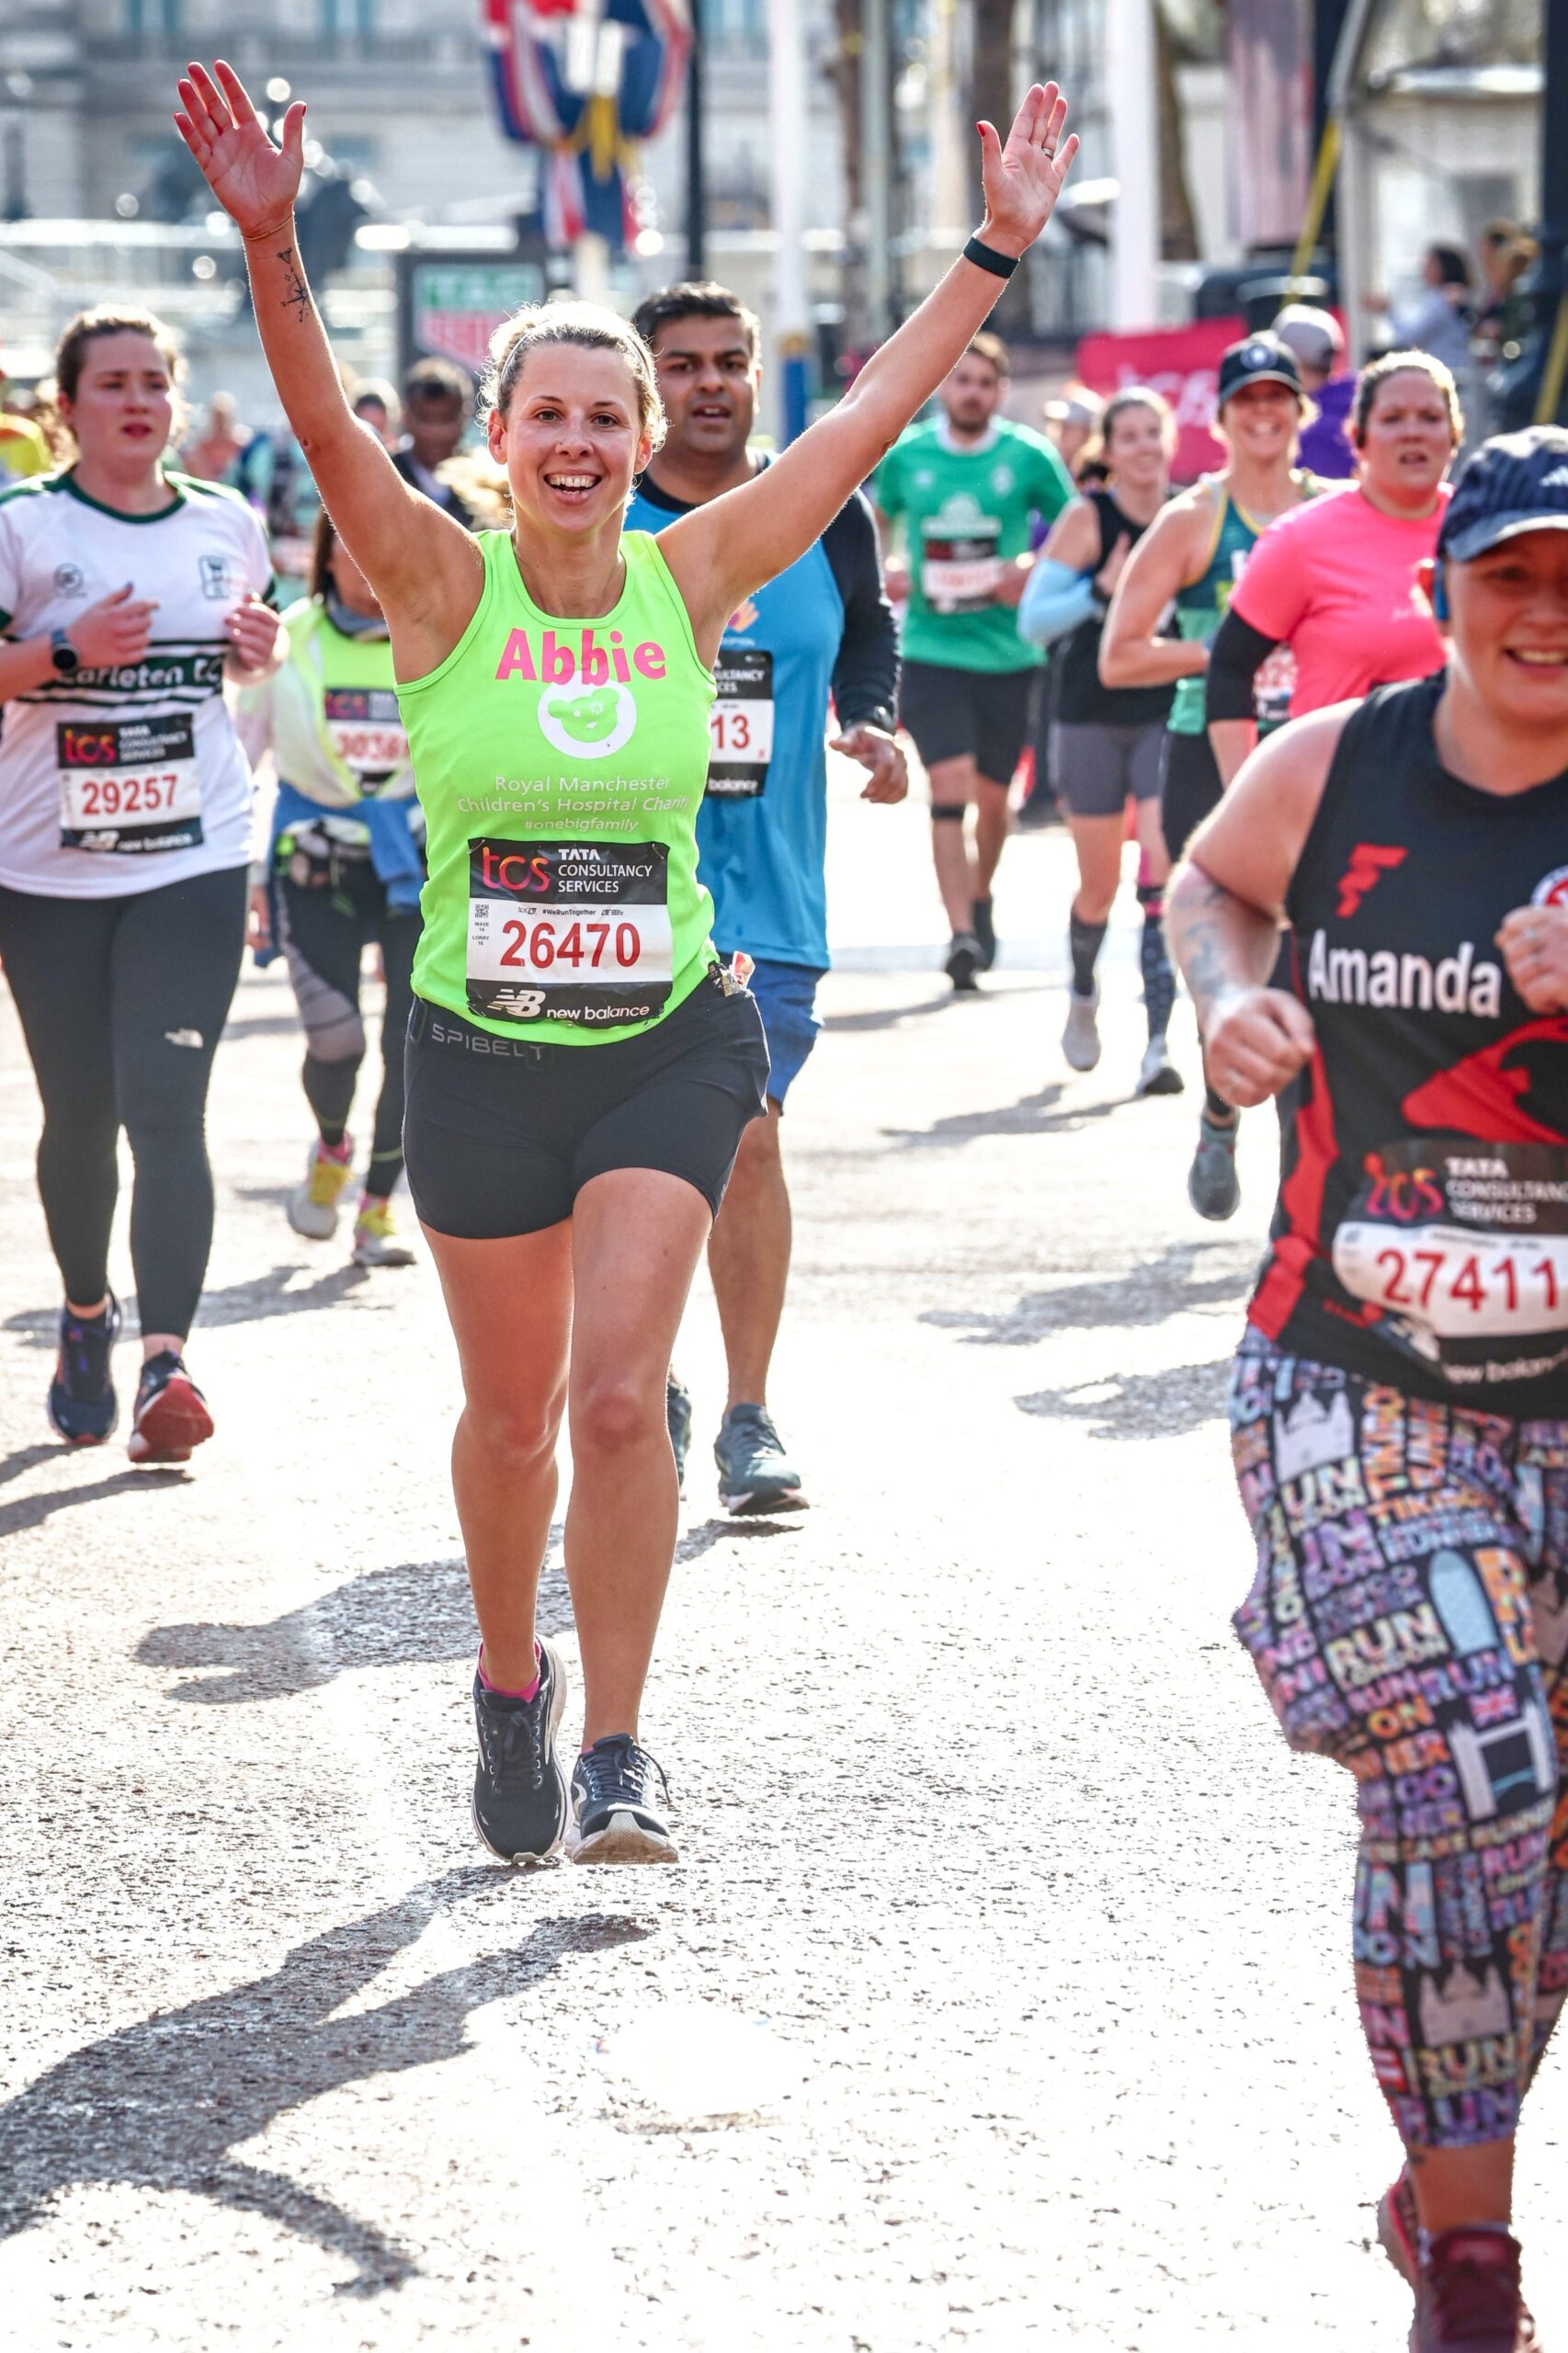 Dr Abbie Brooks, taking part in the London Marathon